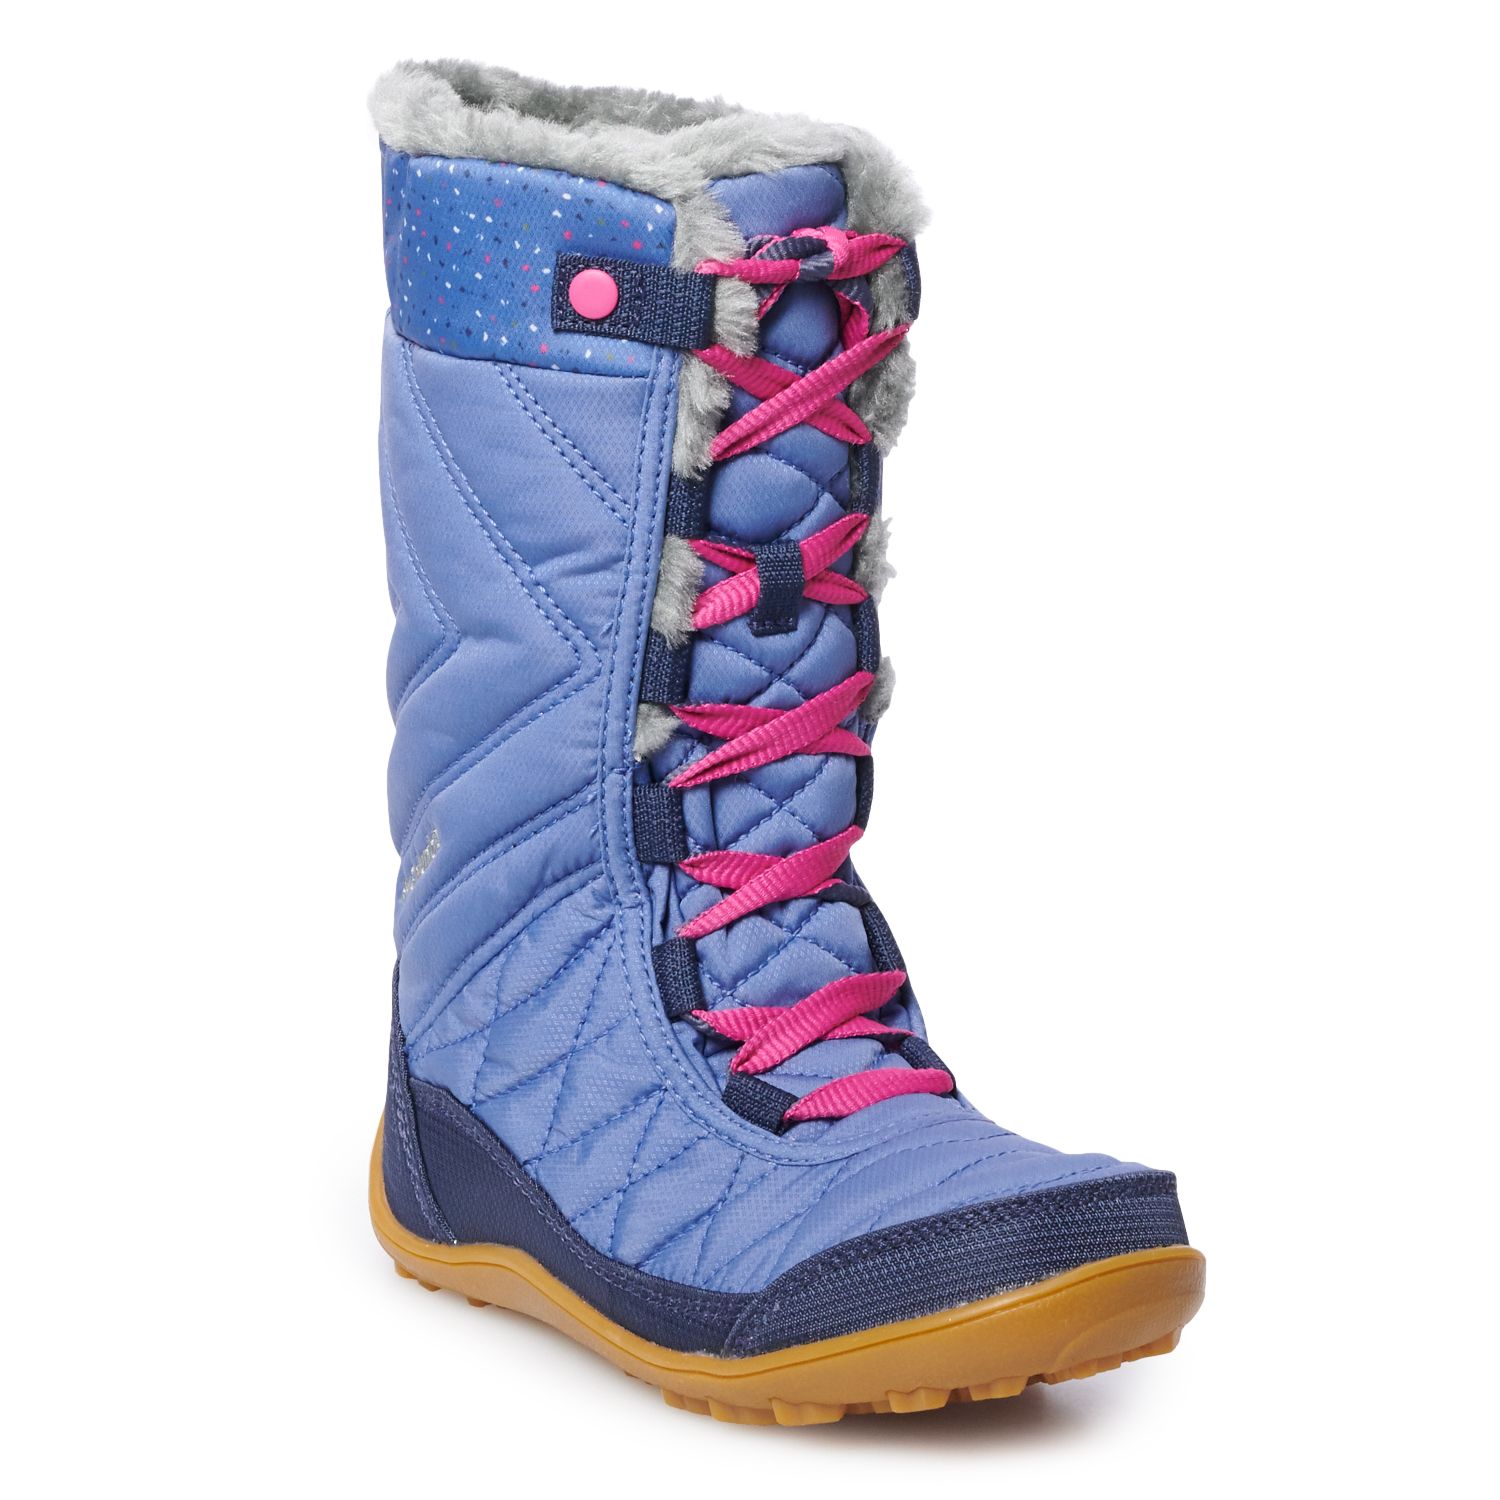 columbia girls winter boots